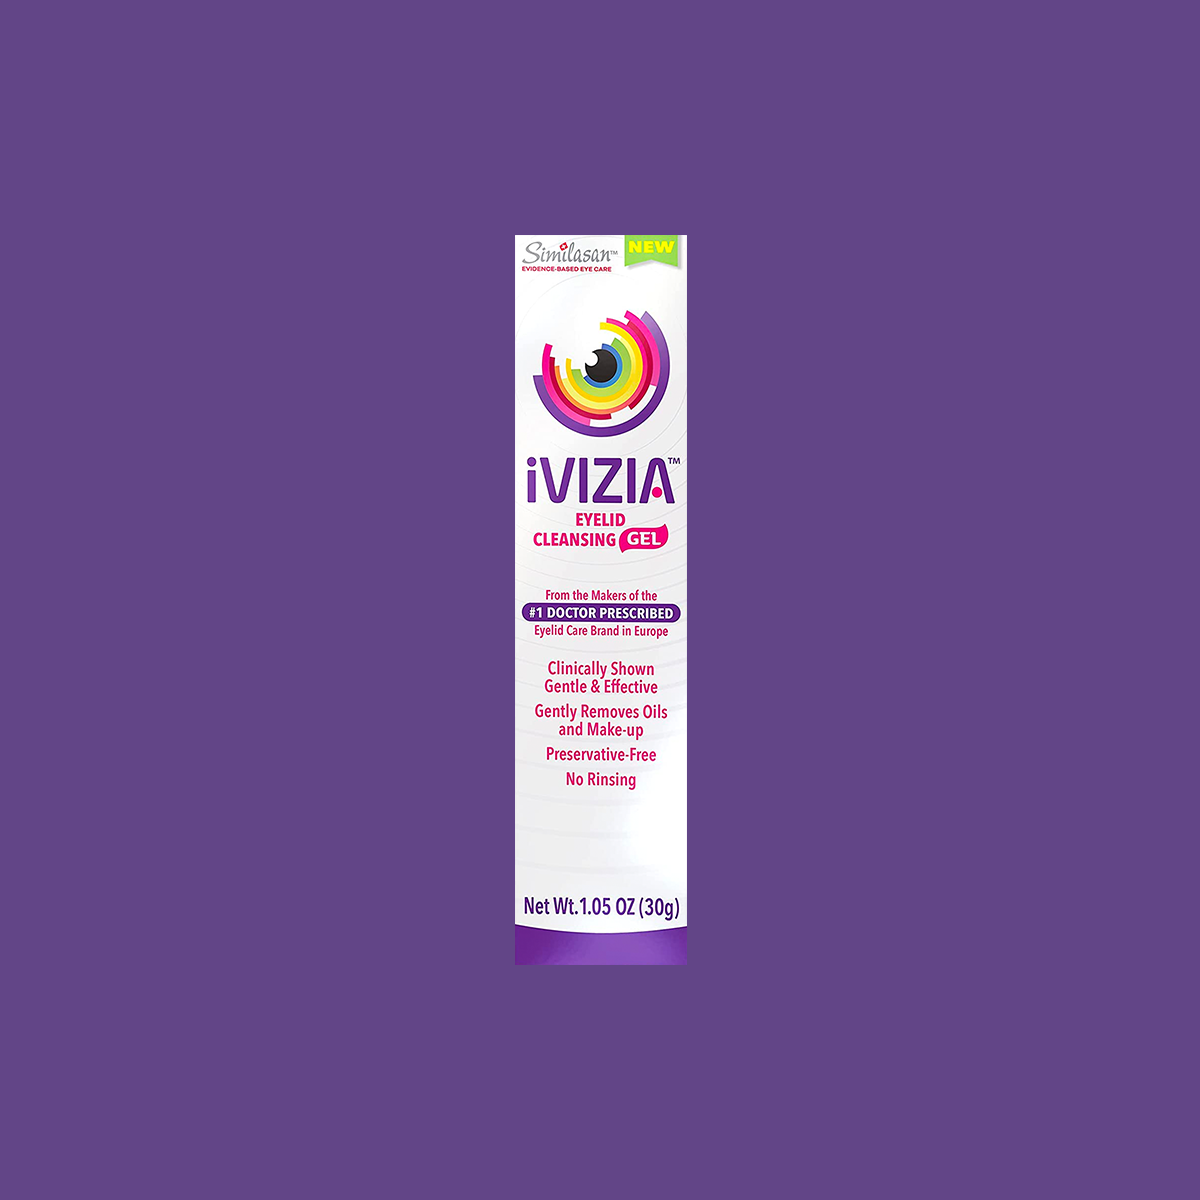 iVIZIA Eyelid Cleansing Gel, Preservative-Free, No Rinse, Gentle Makeup Remover Gel, 1.05 oz Tube